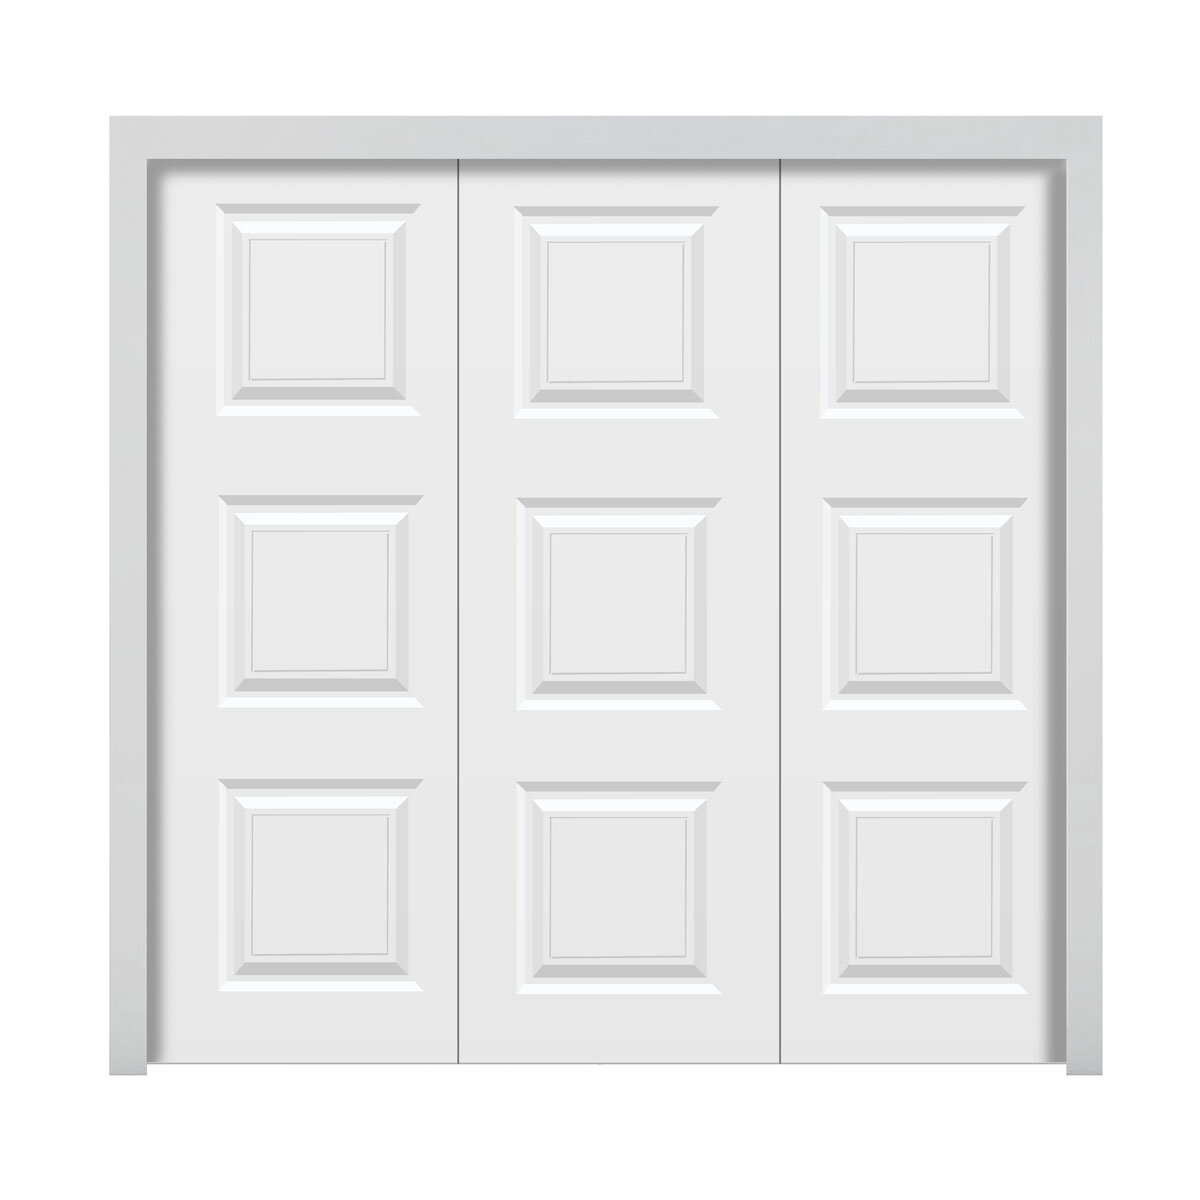 Cardale Georgian Single Garage Door Retractable With Installation in 3 Colours